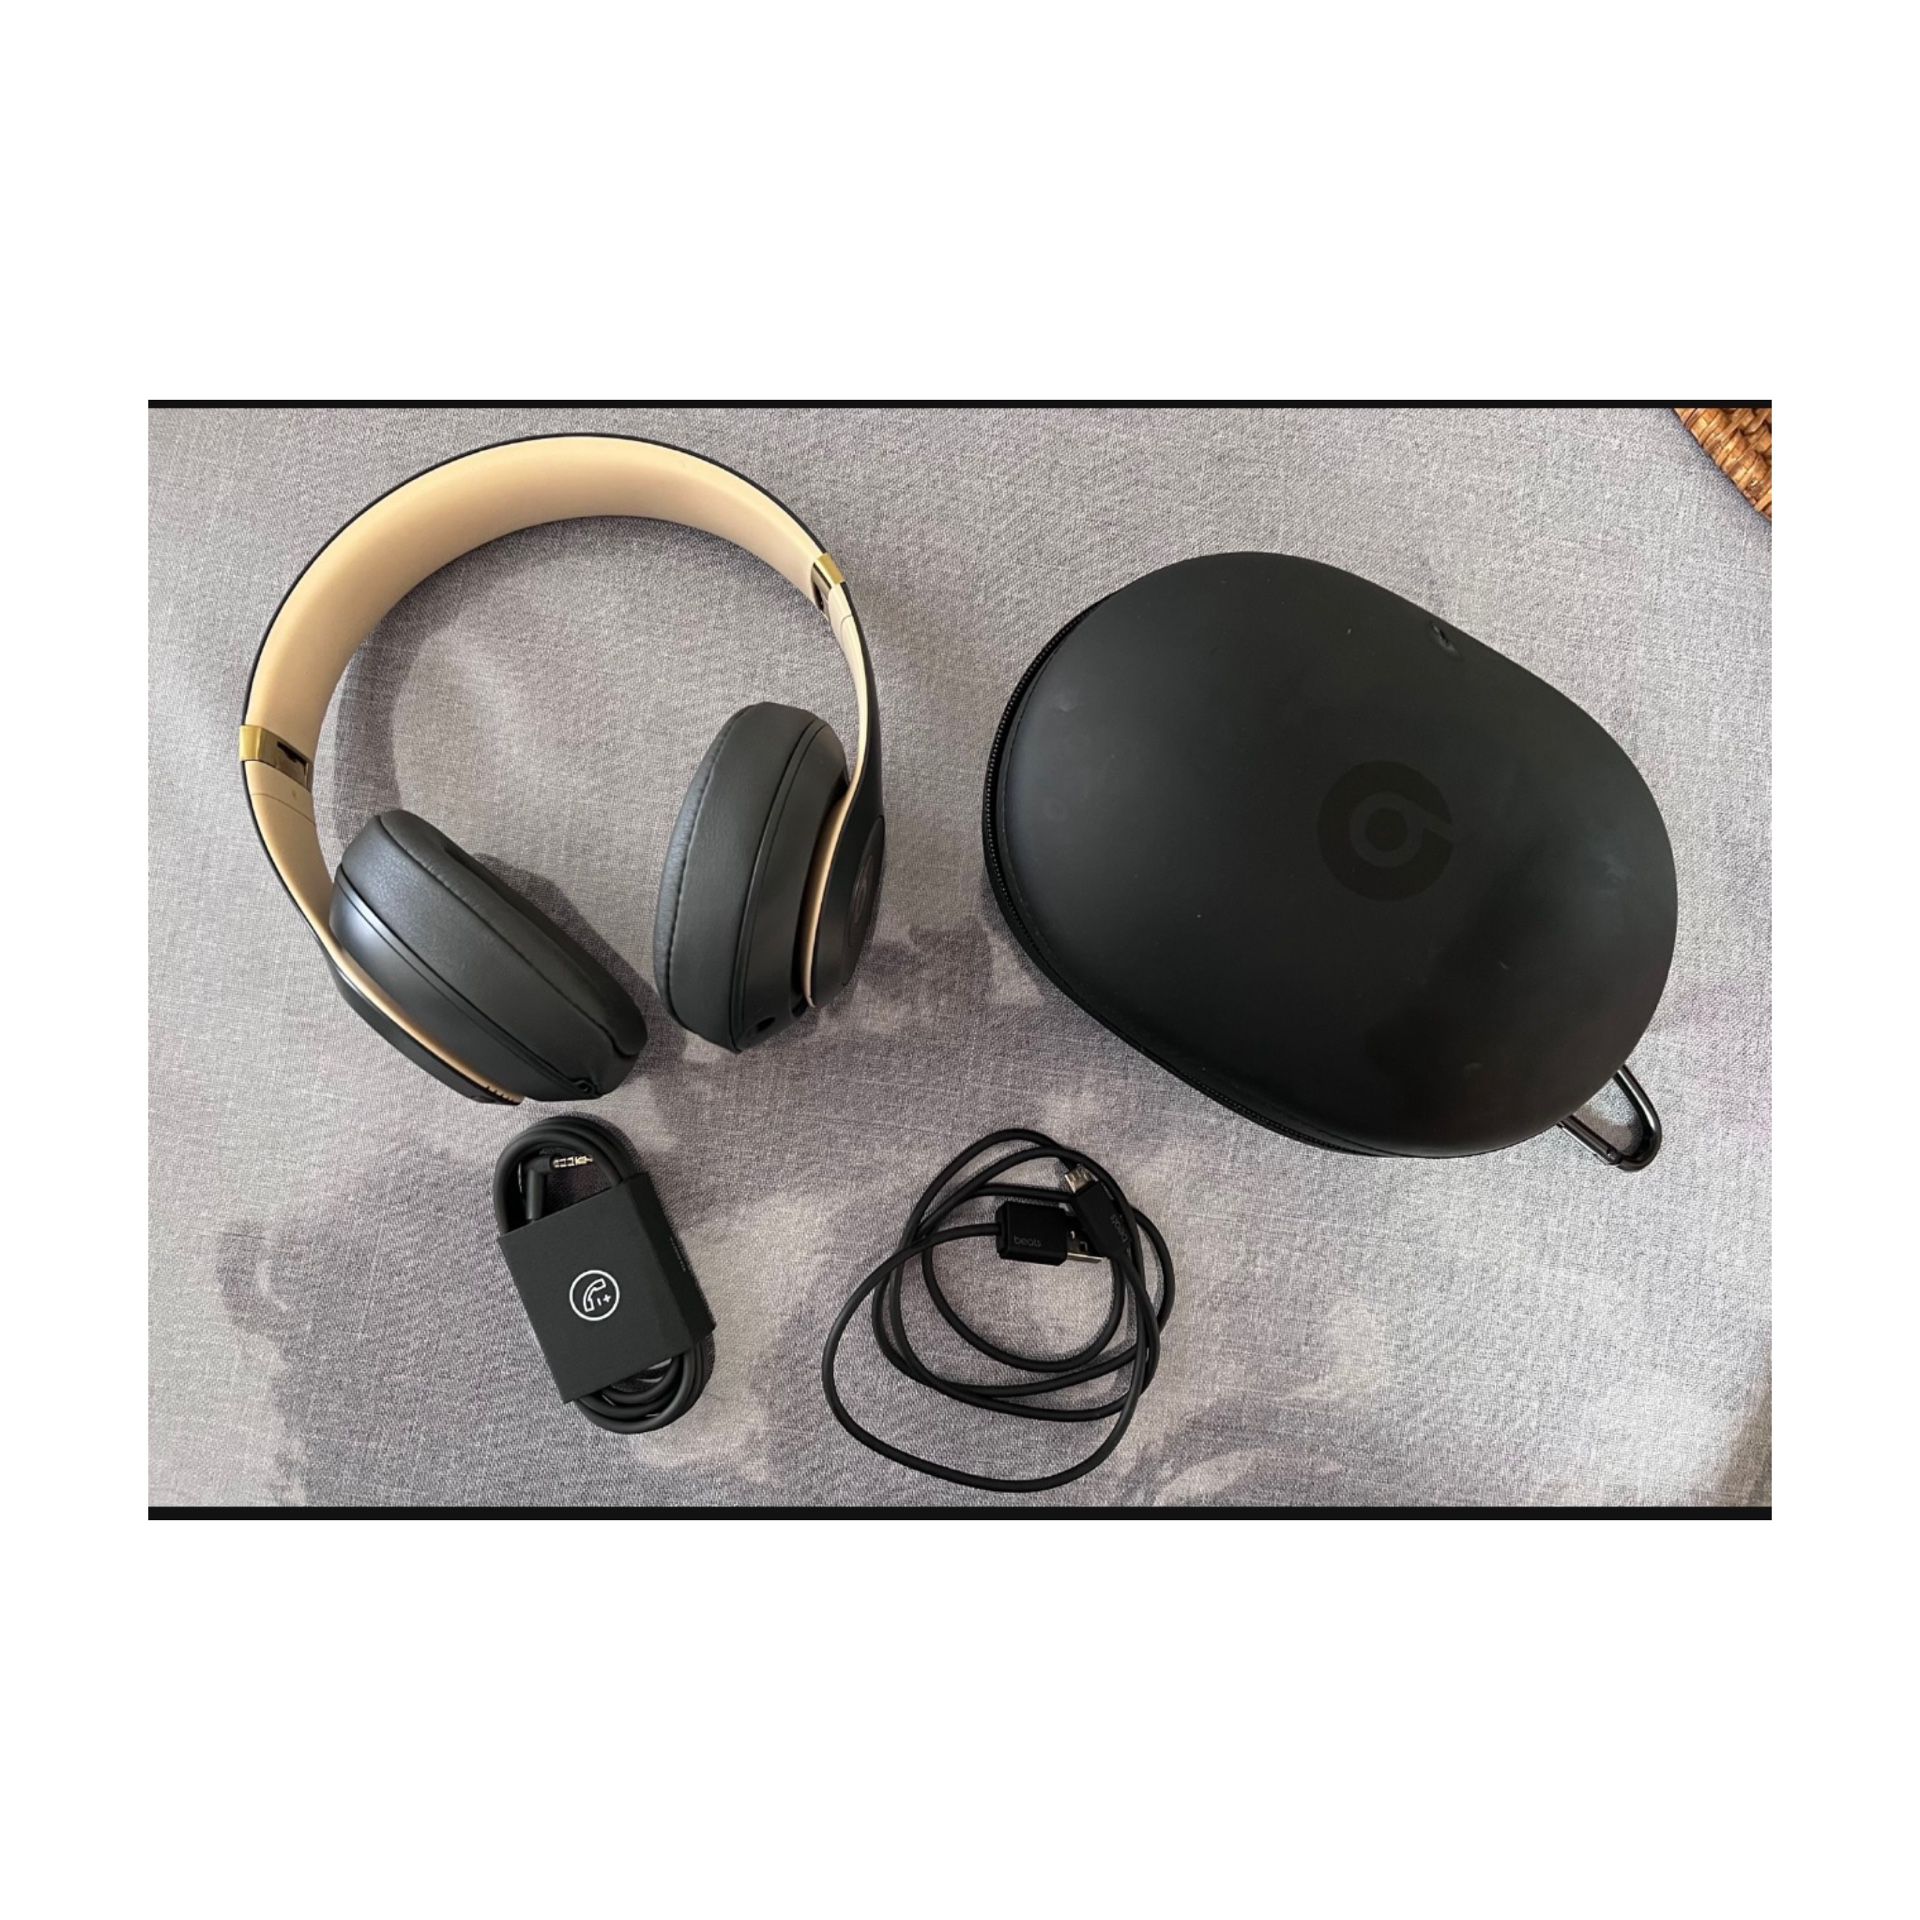 Beats Studio Wireless Noise Cancelling Over-Ear Headphones